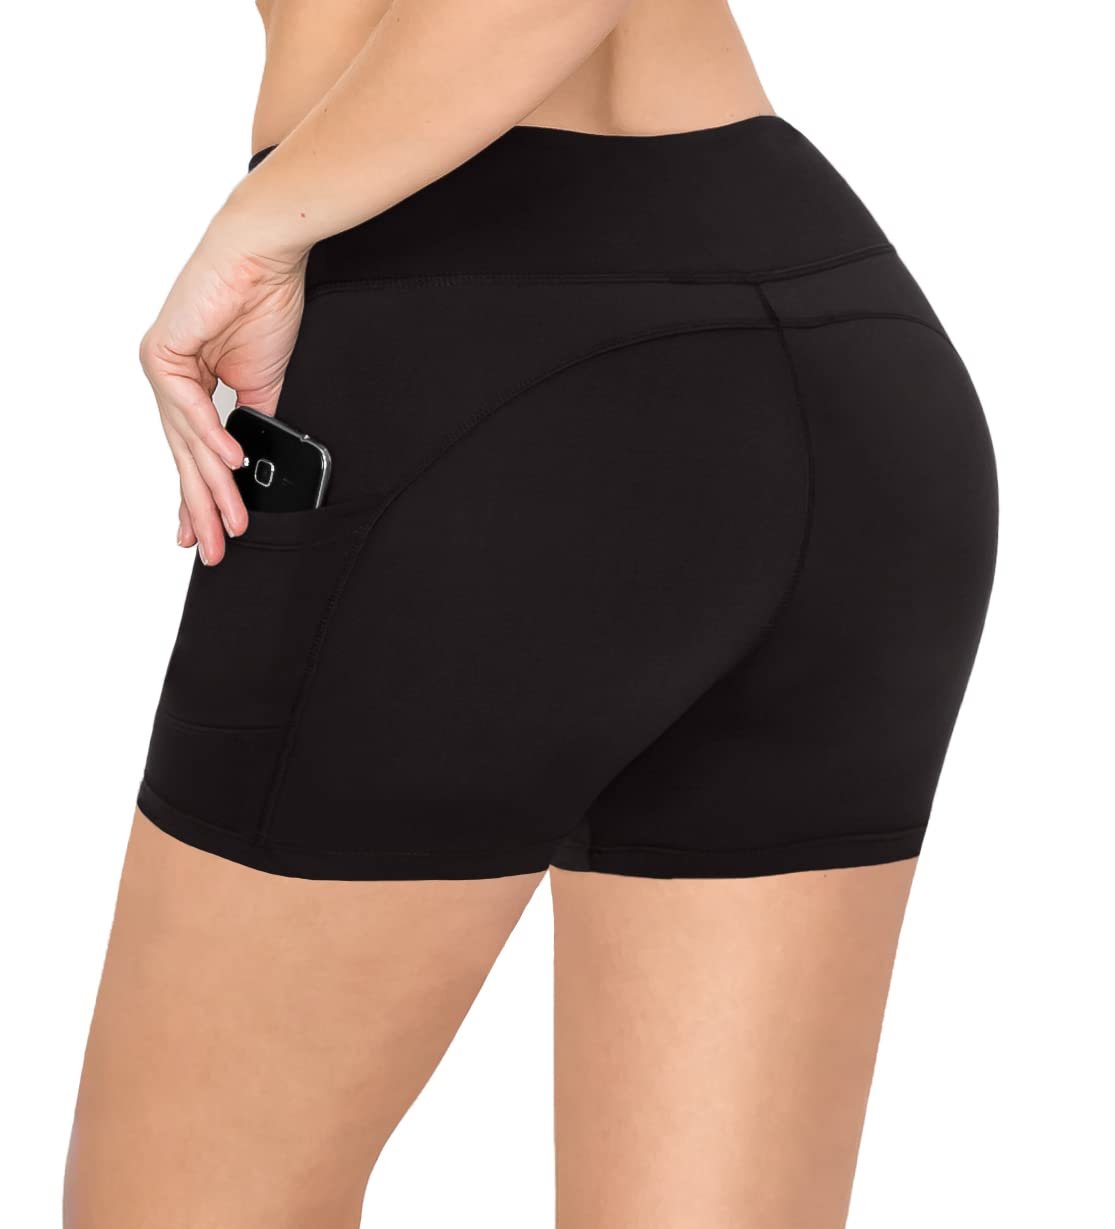 SATINA Biker Shorts for Women - High Waist Biker Shorts with Pockets - Yoga Shorts for Regular & Plus Size Women (5-Inch, X-Large, Black Shorts)